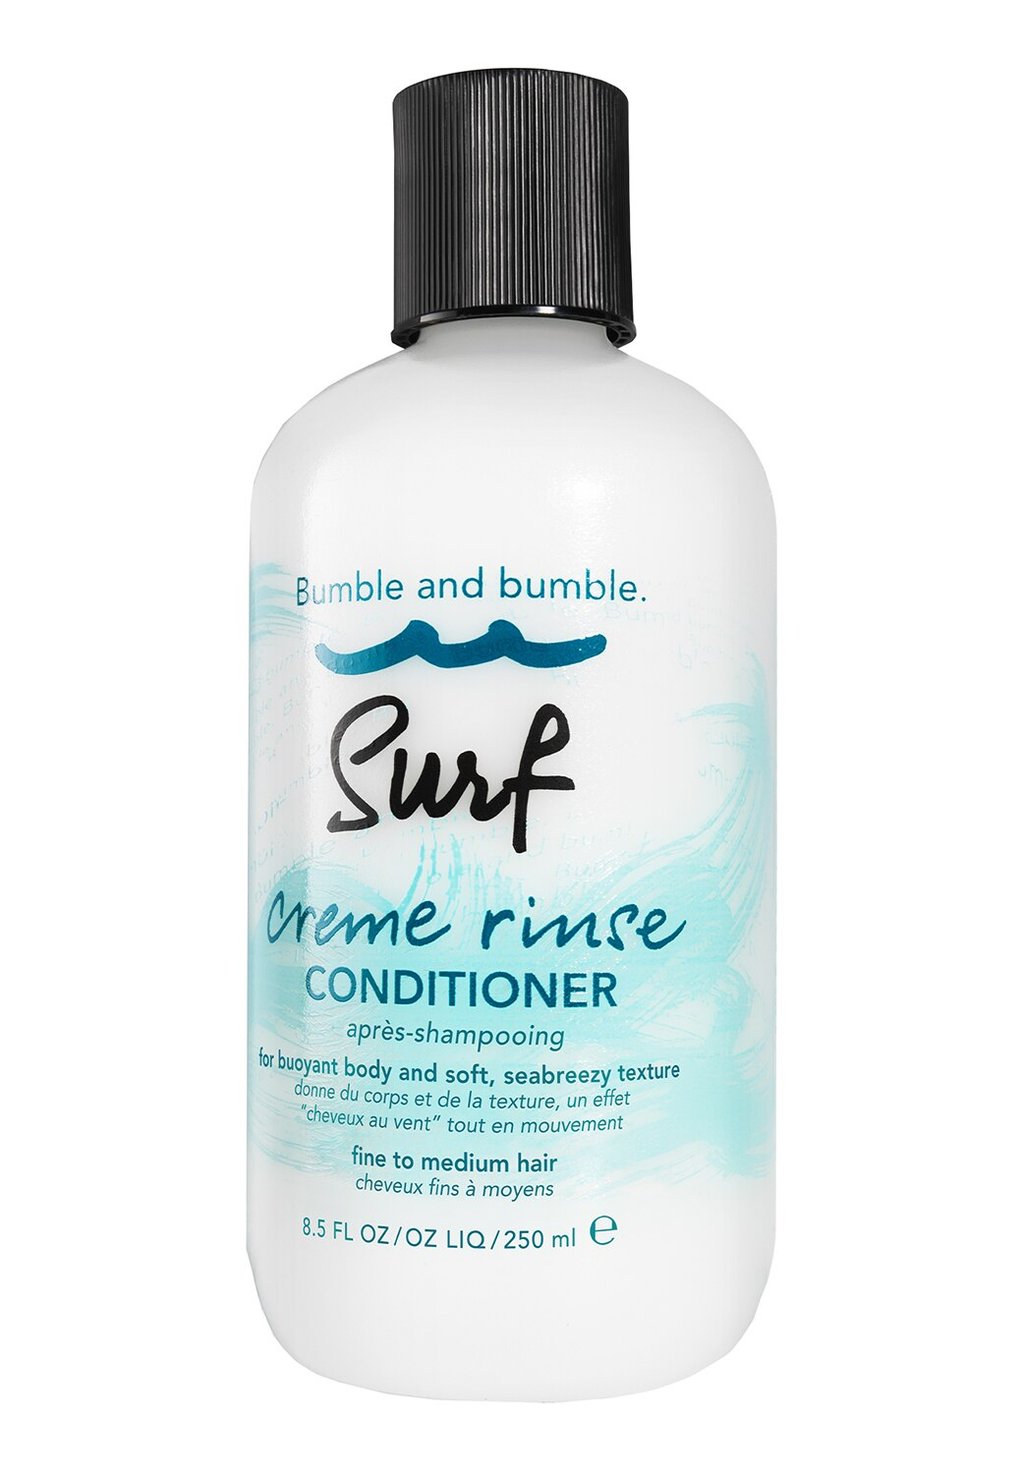 Кондиционер Surf Creme Rinse Conditioner Bumble and bumble